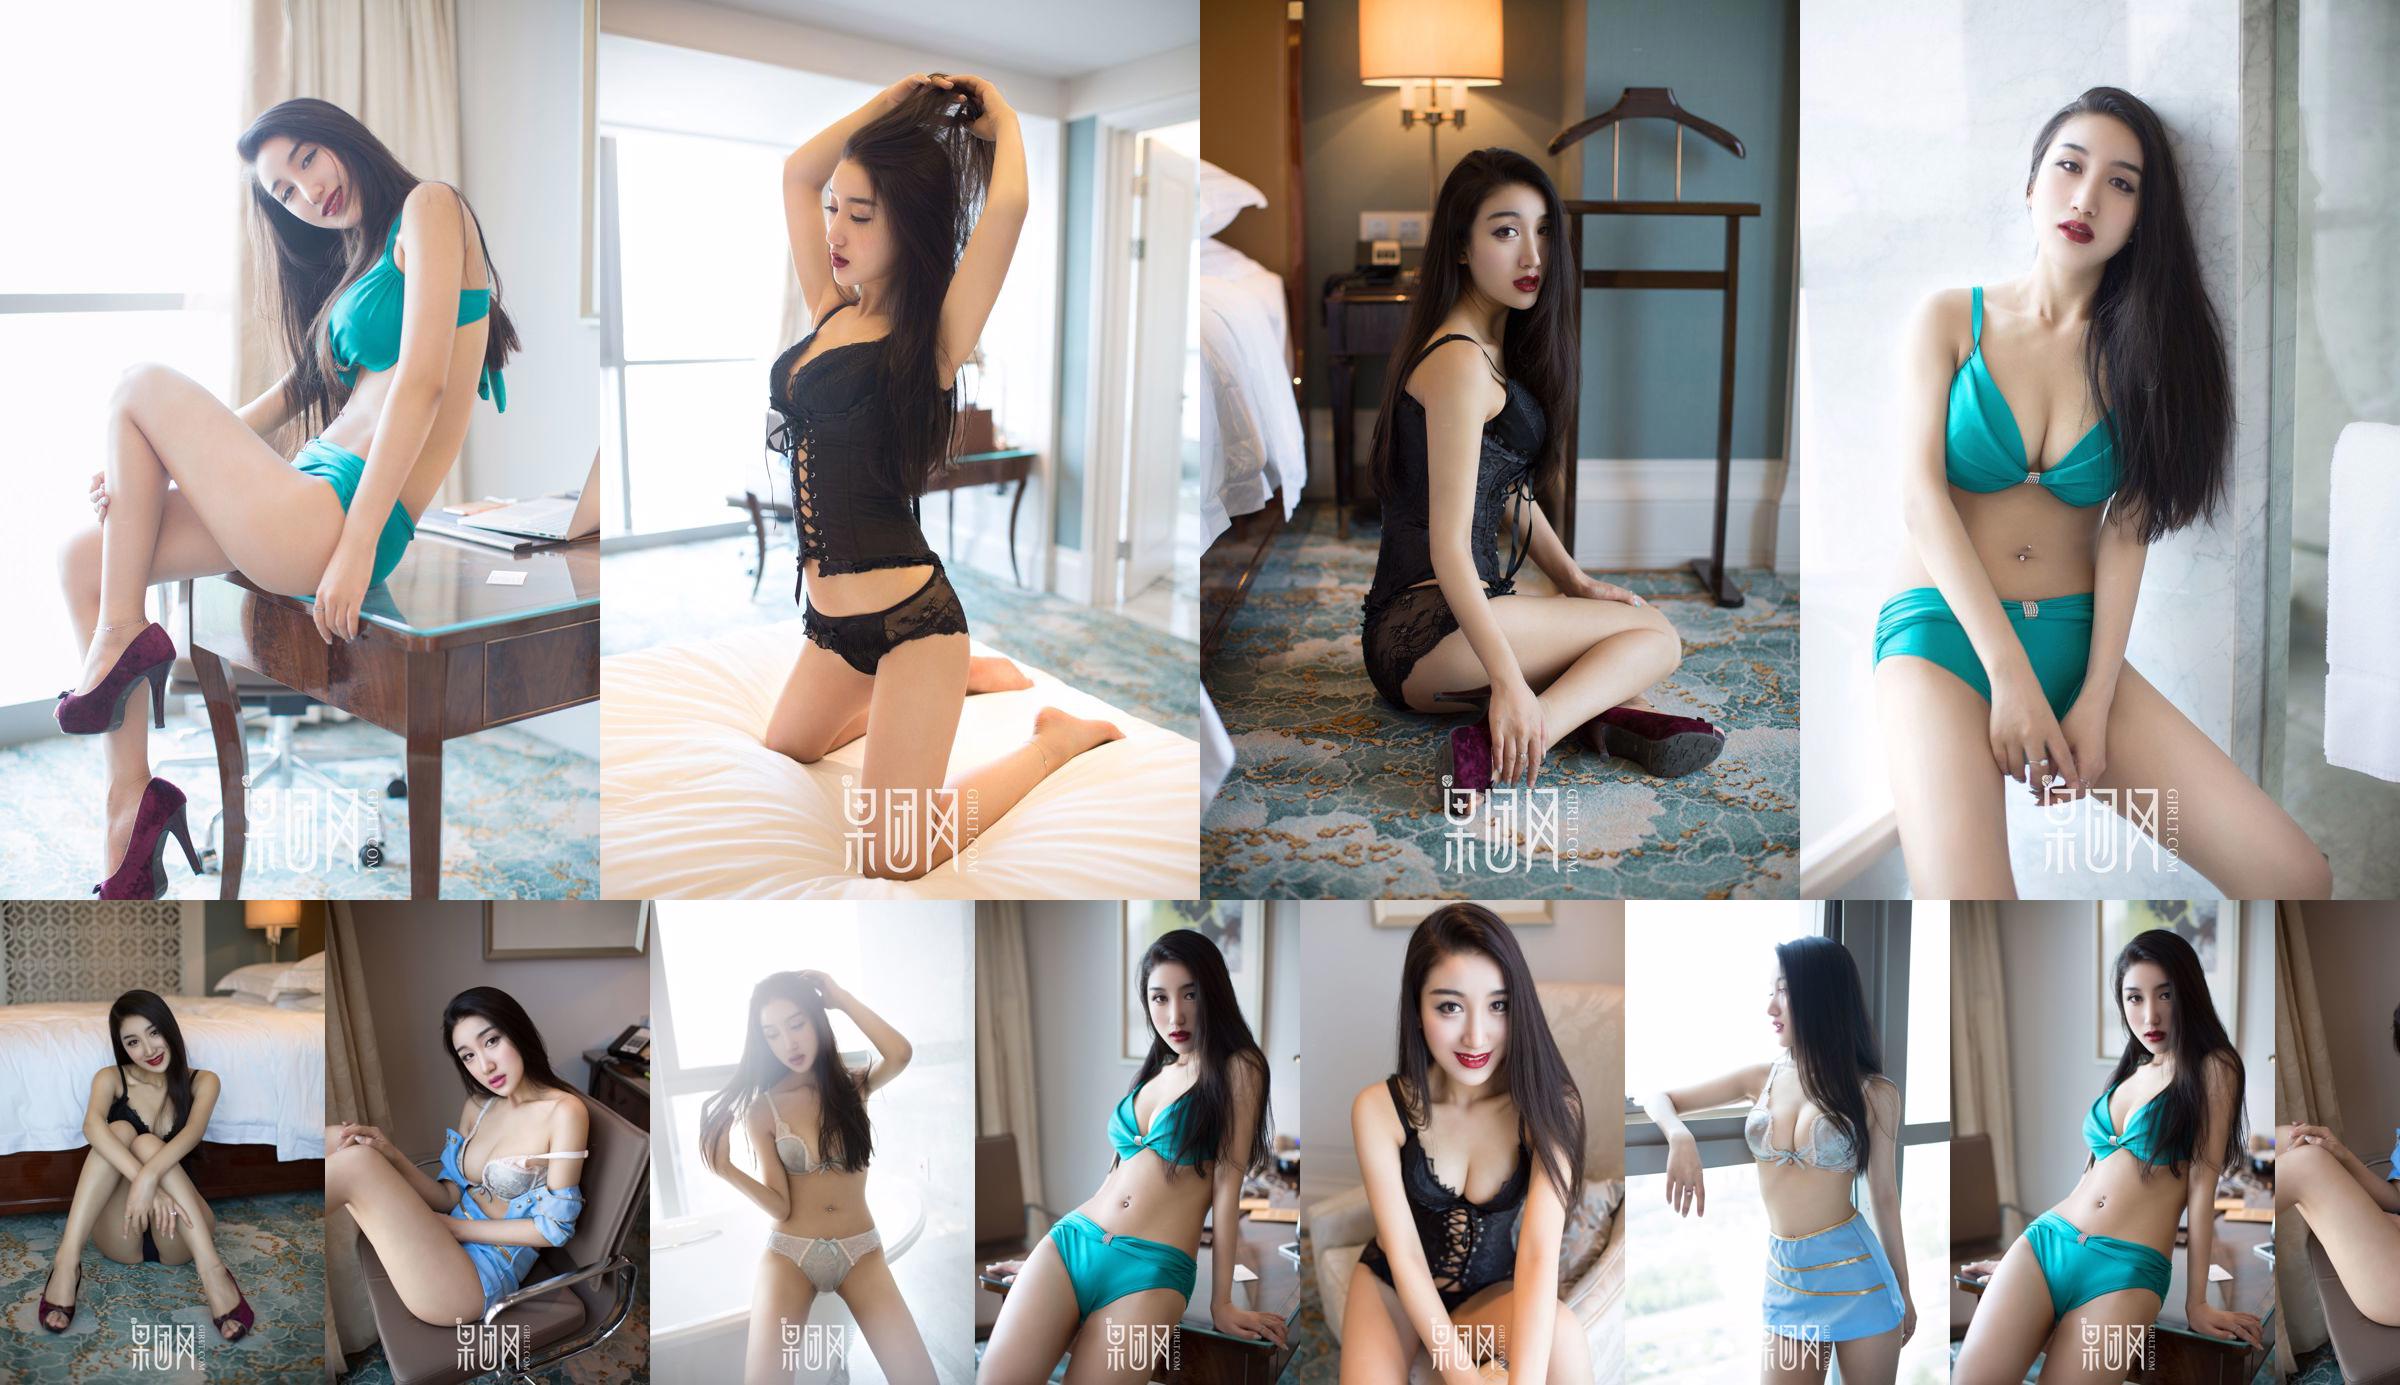 Wang Zheng "Vent chaud sexy" [Girlt] No.050 No.643aee Page 1